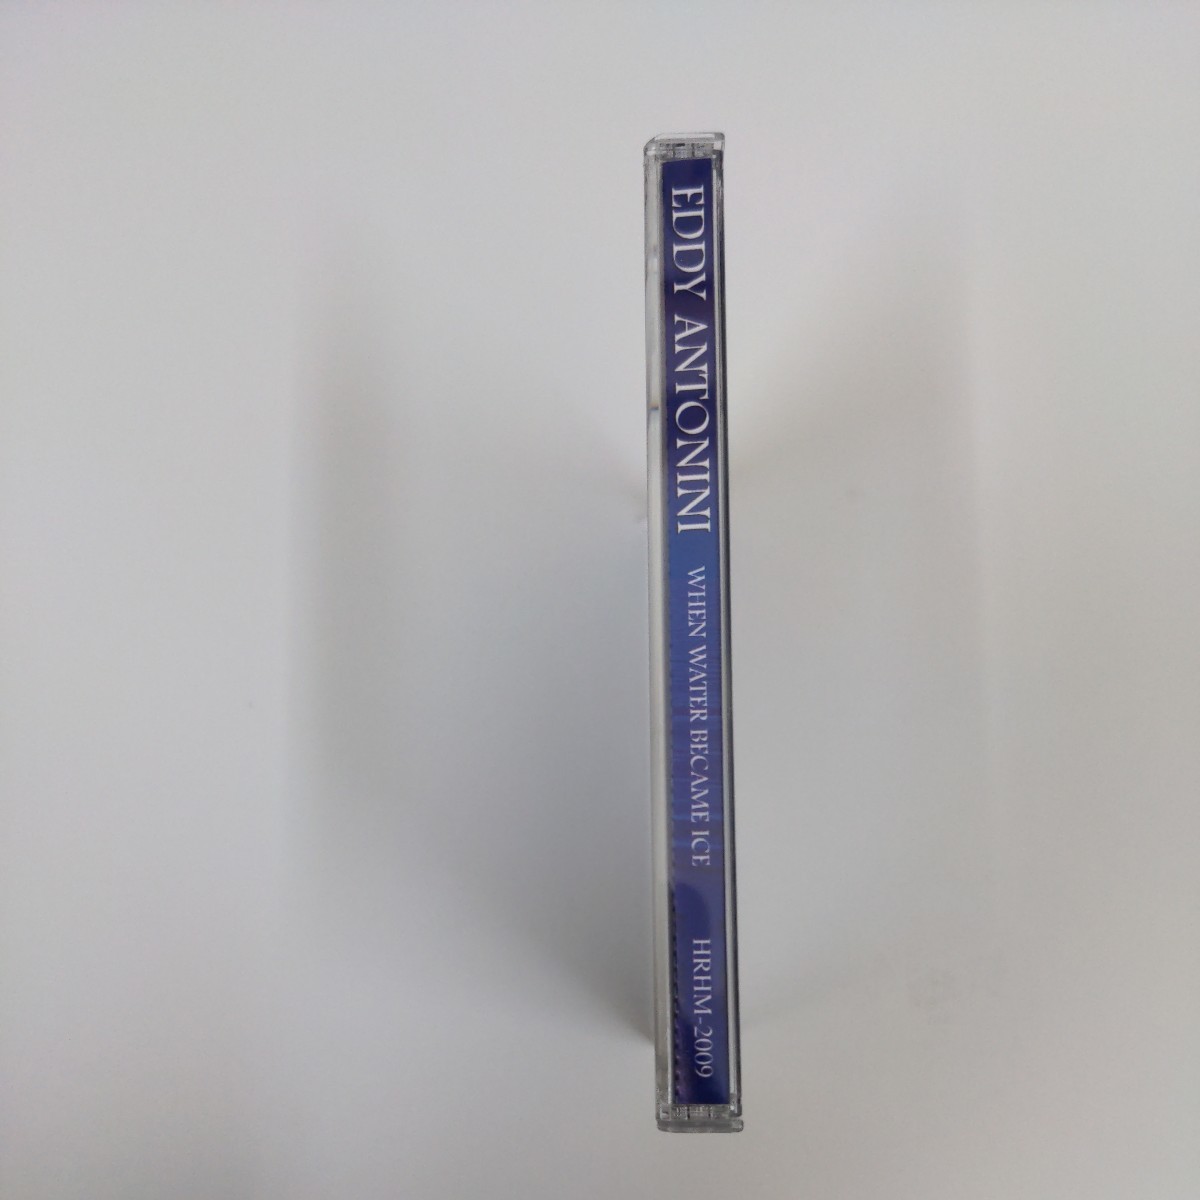 EDDY ANTONINI Skylark Italy Symphonic Heavy Metal シンフォニック・ヘヴィメタル 国内盤CD 帯付の画像8